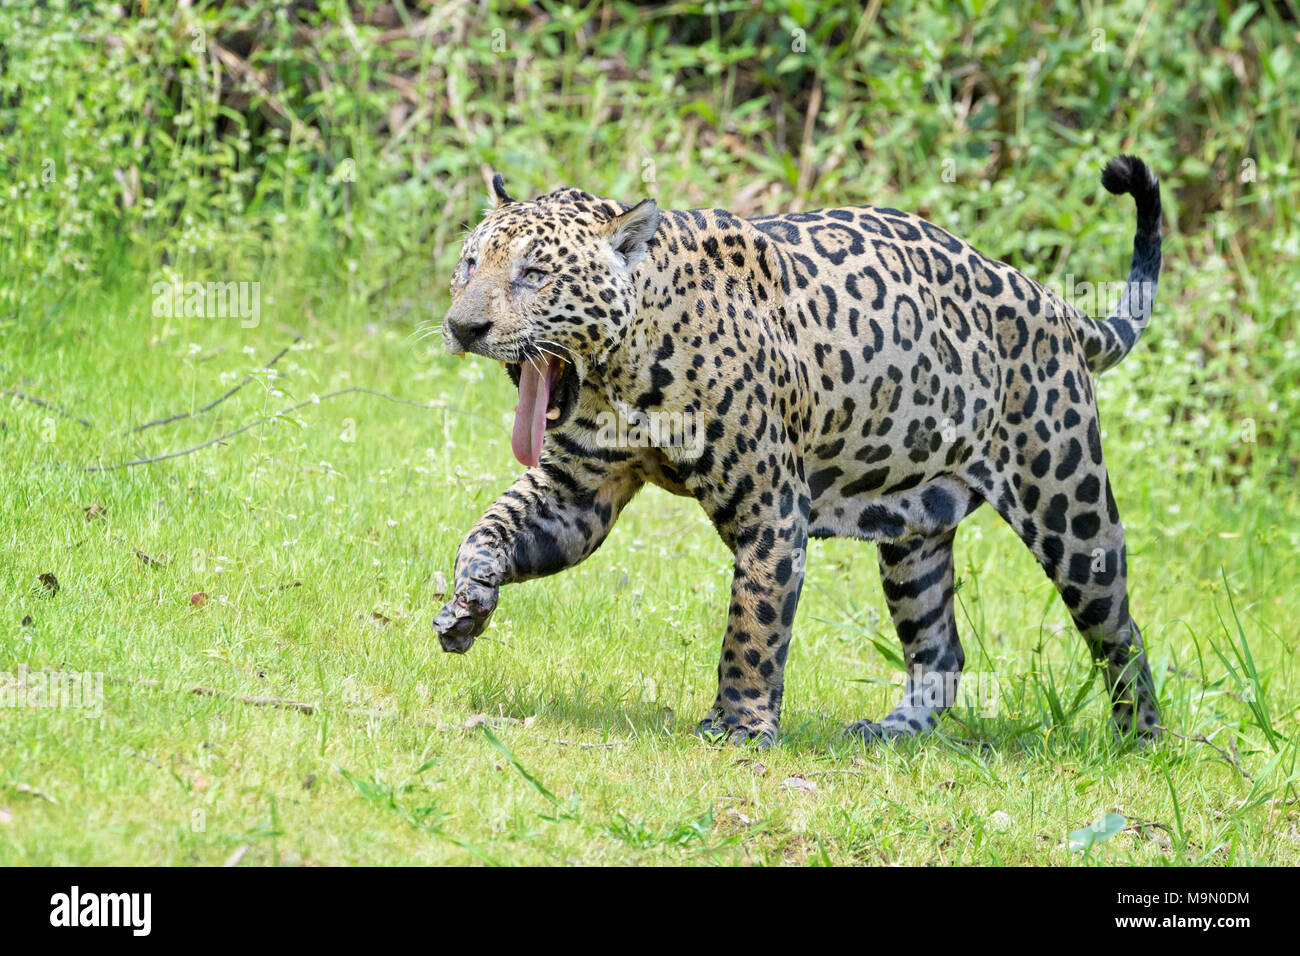 Jaguar tongue hi-res stock photography and images - Alamy